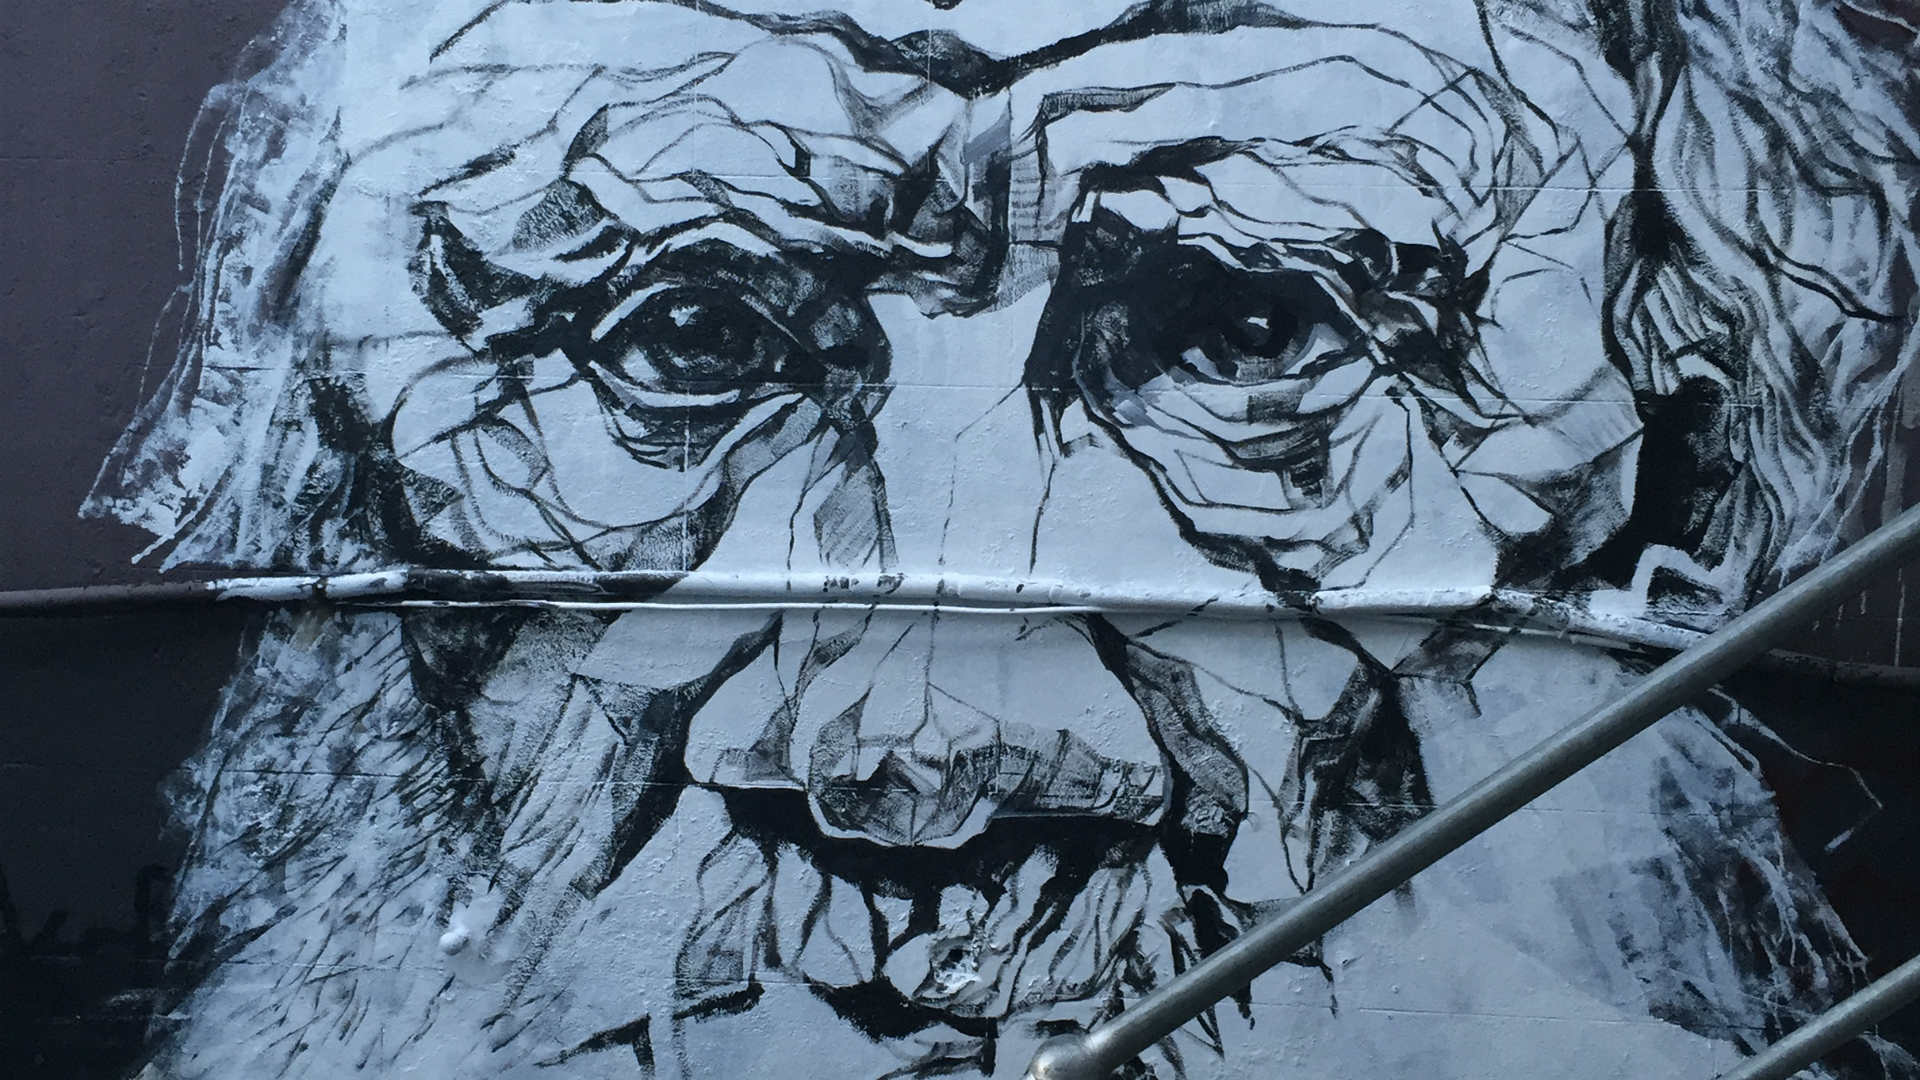 Sydney Street Artist MCRT Is Taking Over the Walls at Paddington's Ampersand